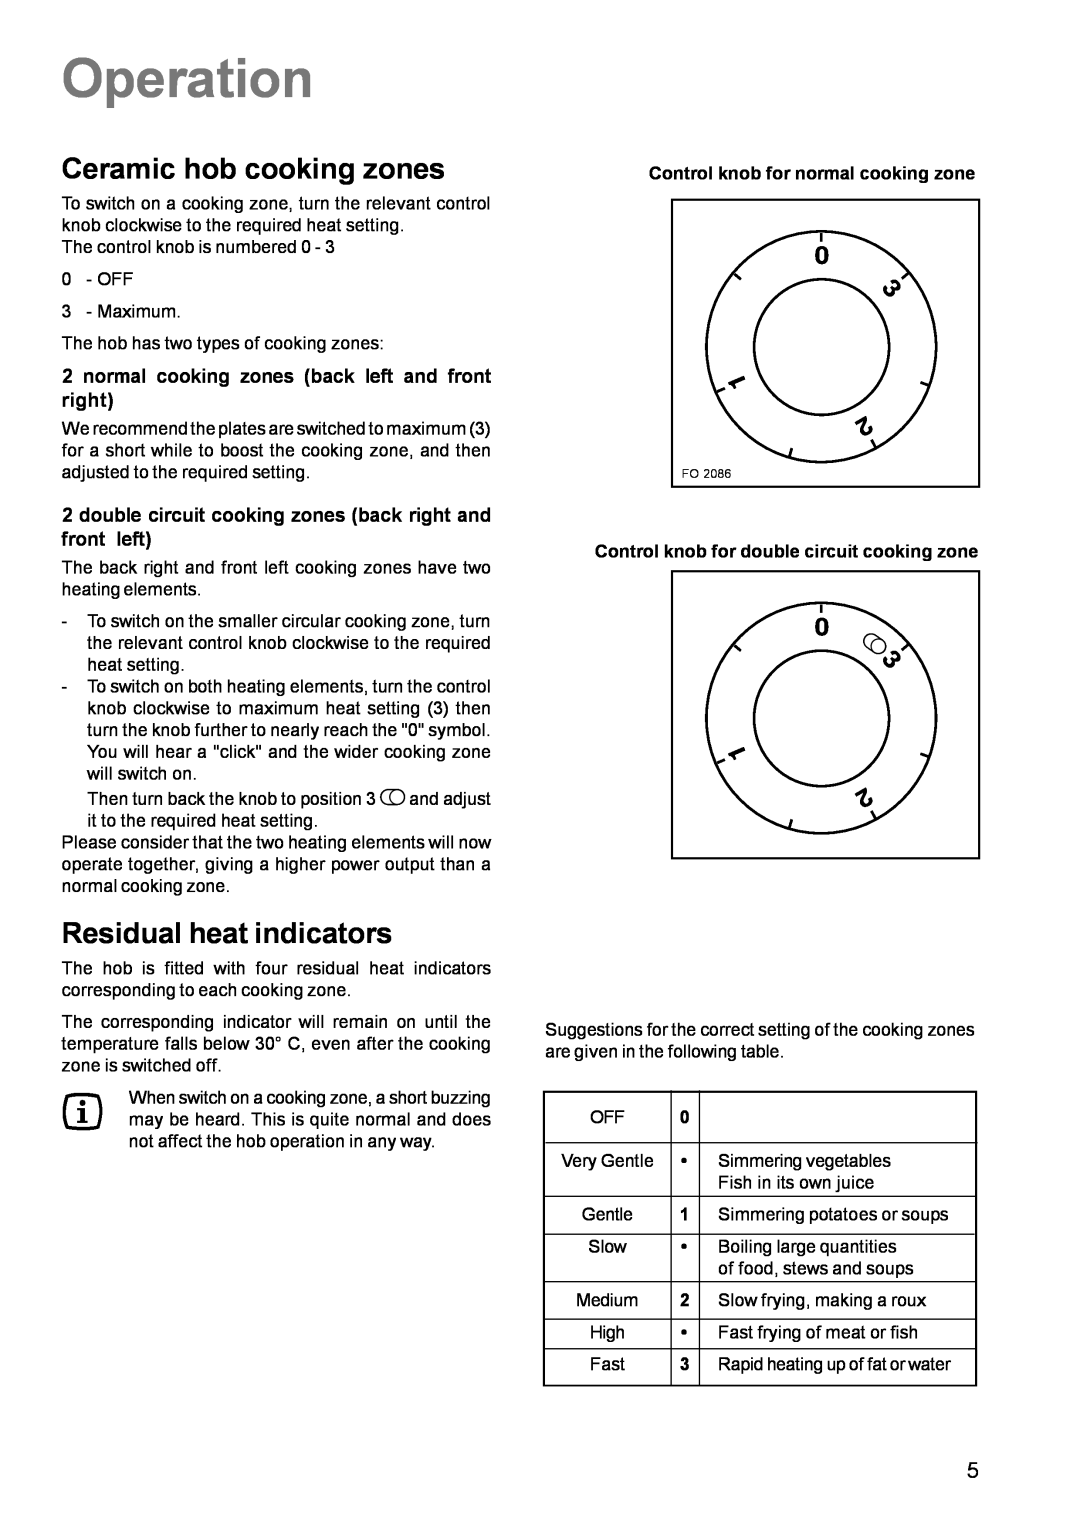 Zanussi ZCE 630 manual Operation, Ceramic hob cooking zones, Residual heat indicators 